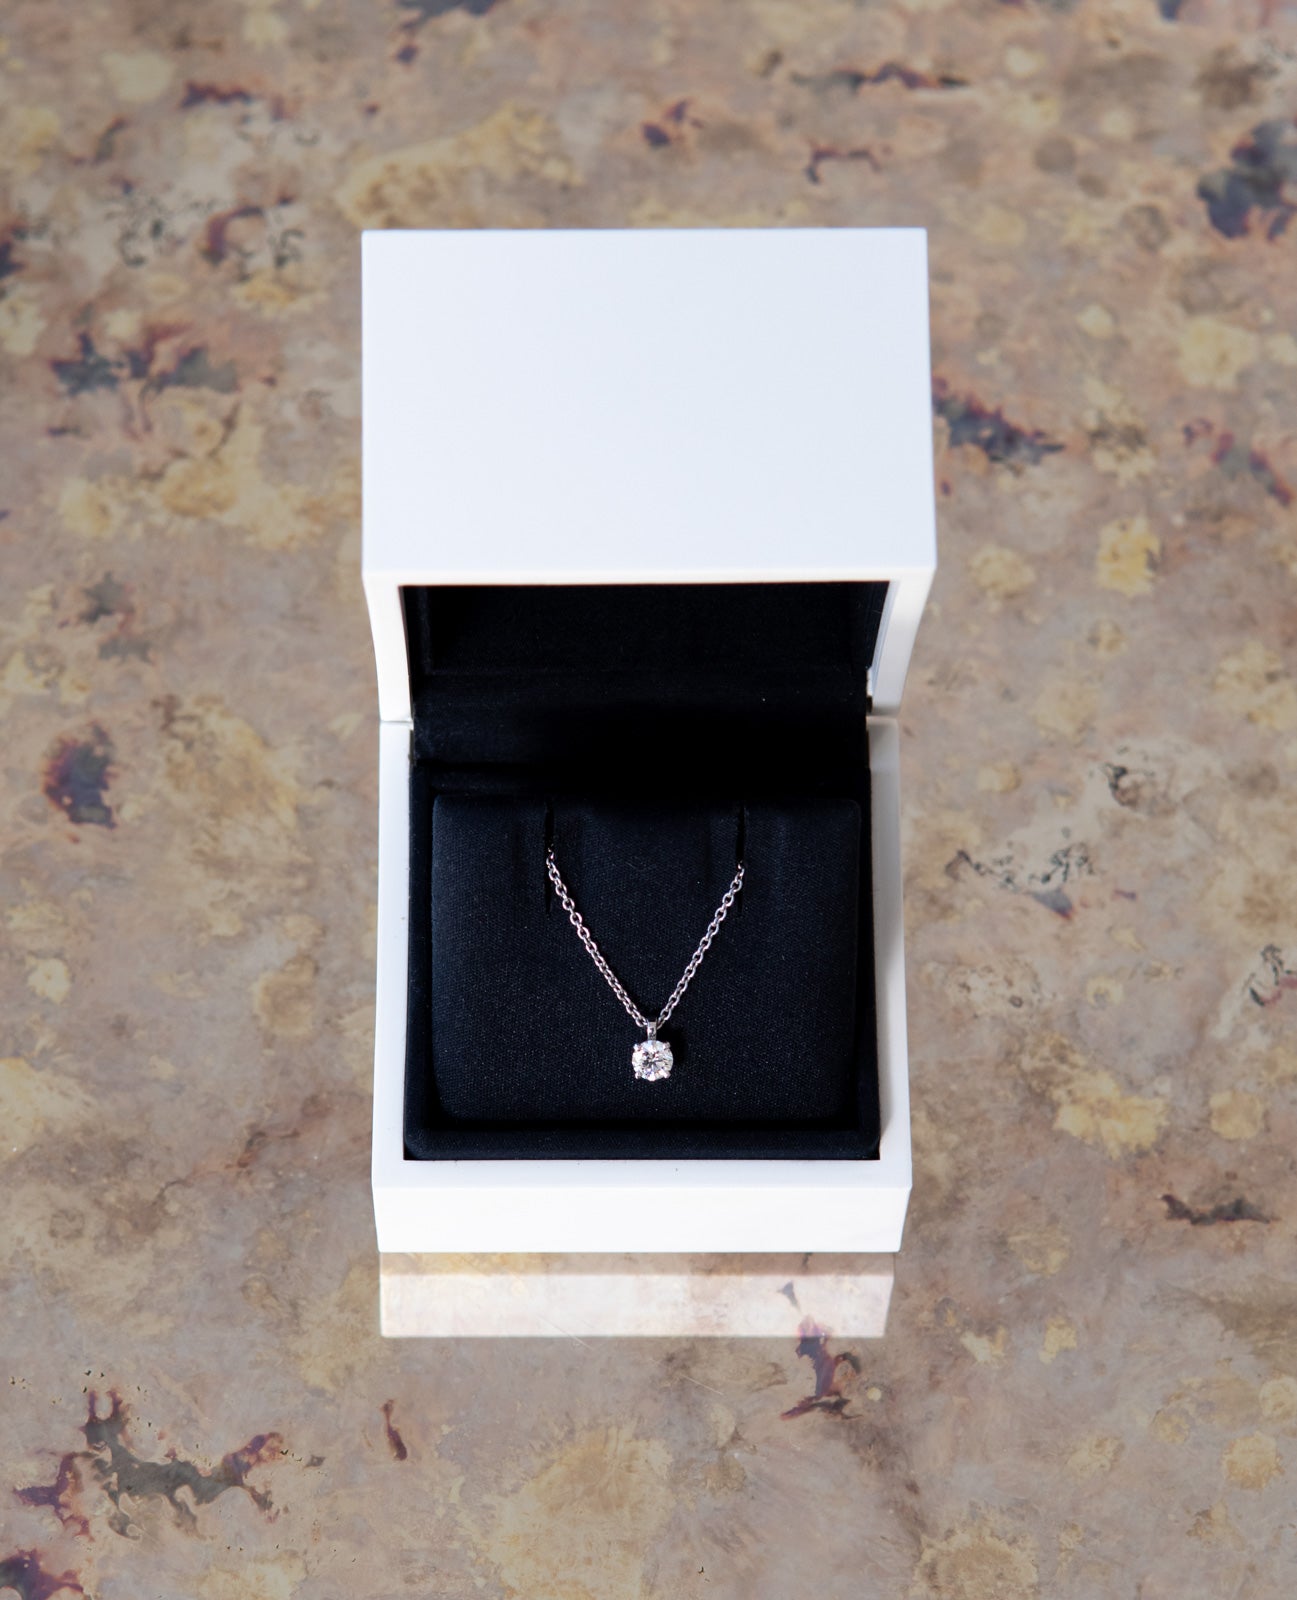 De Beers Classic Round Diamond Pendant Necklace - Image 6 of 6